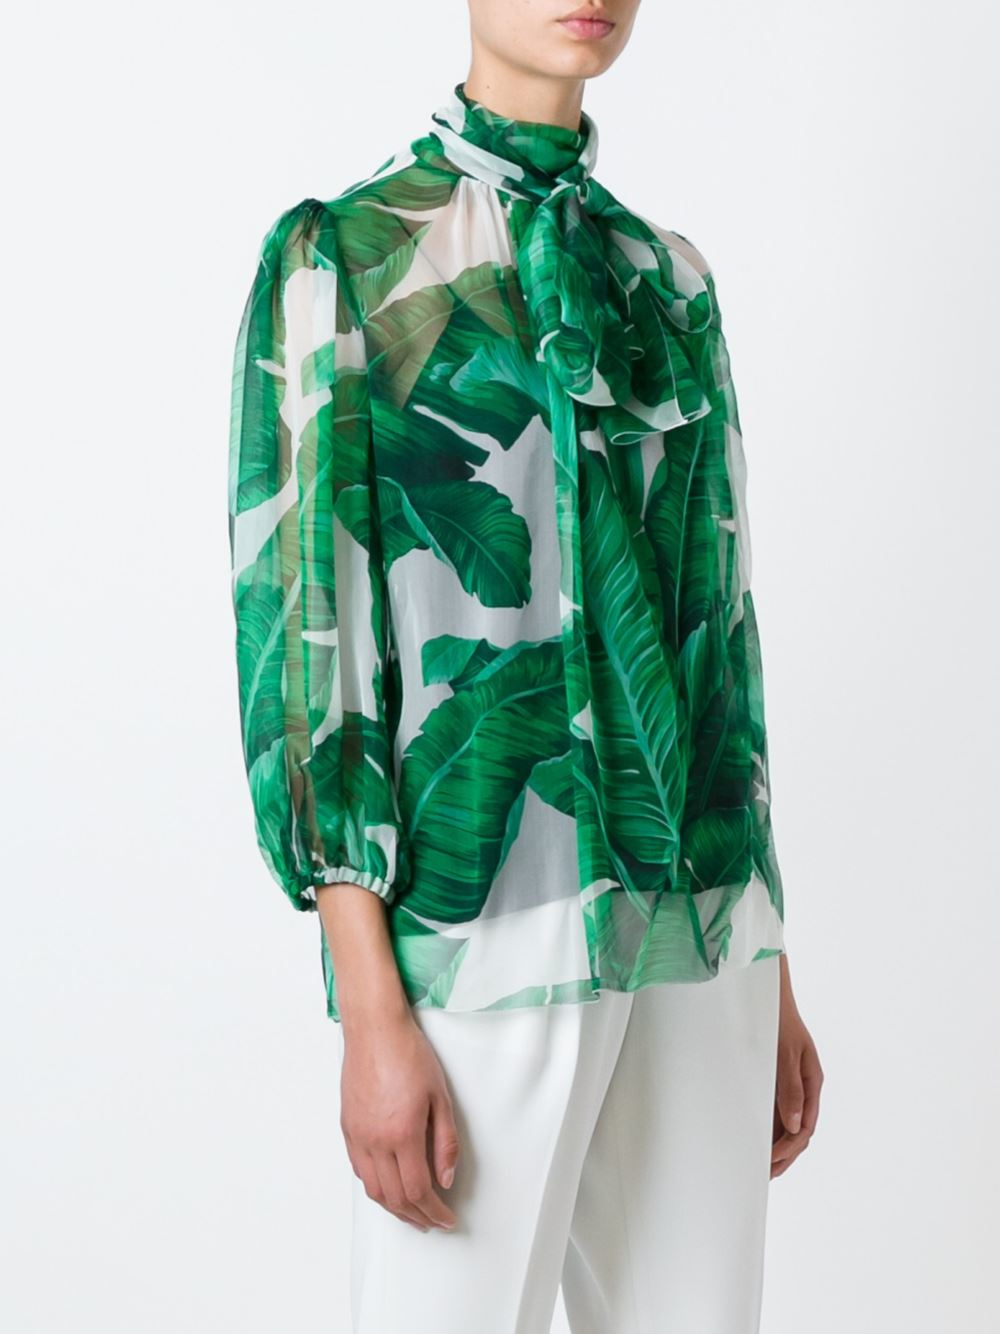 Aprender acerca 56+ imagen dolce and gabbana green blouse